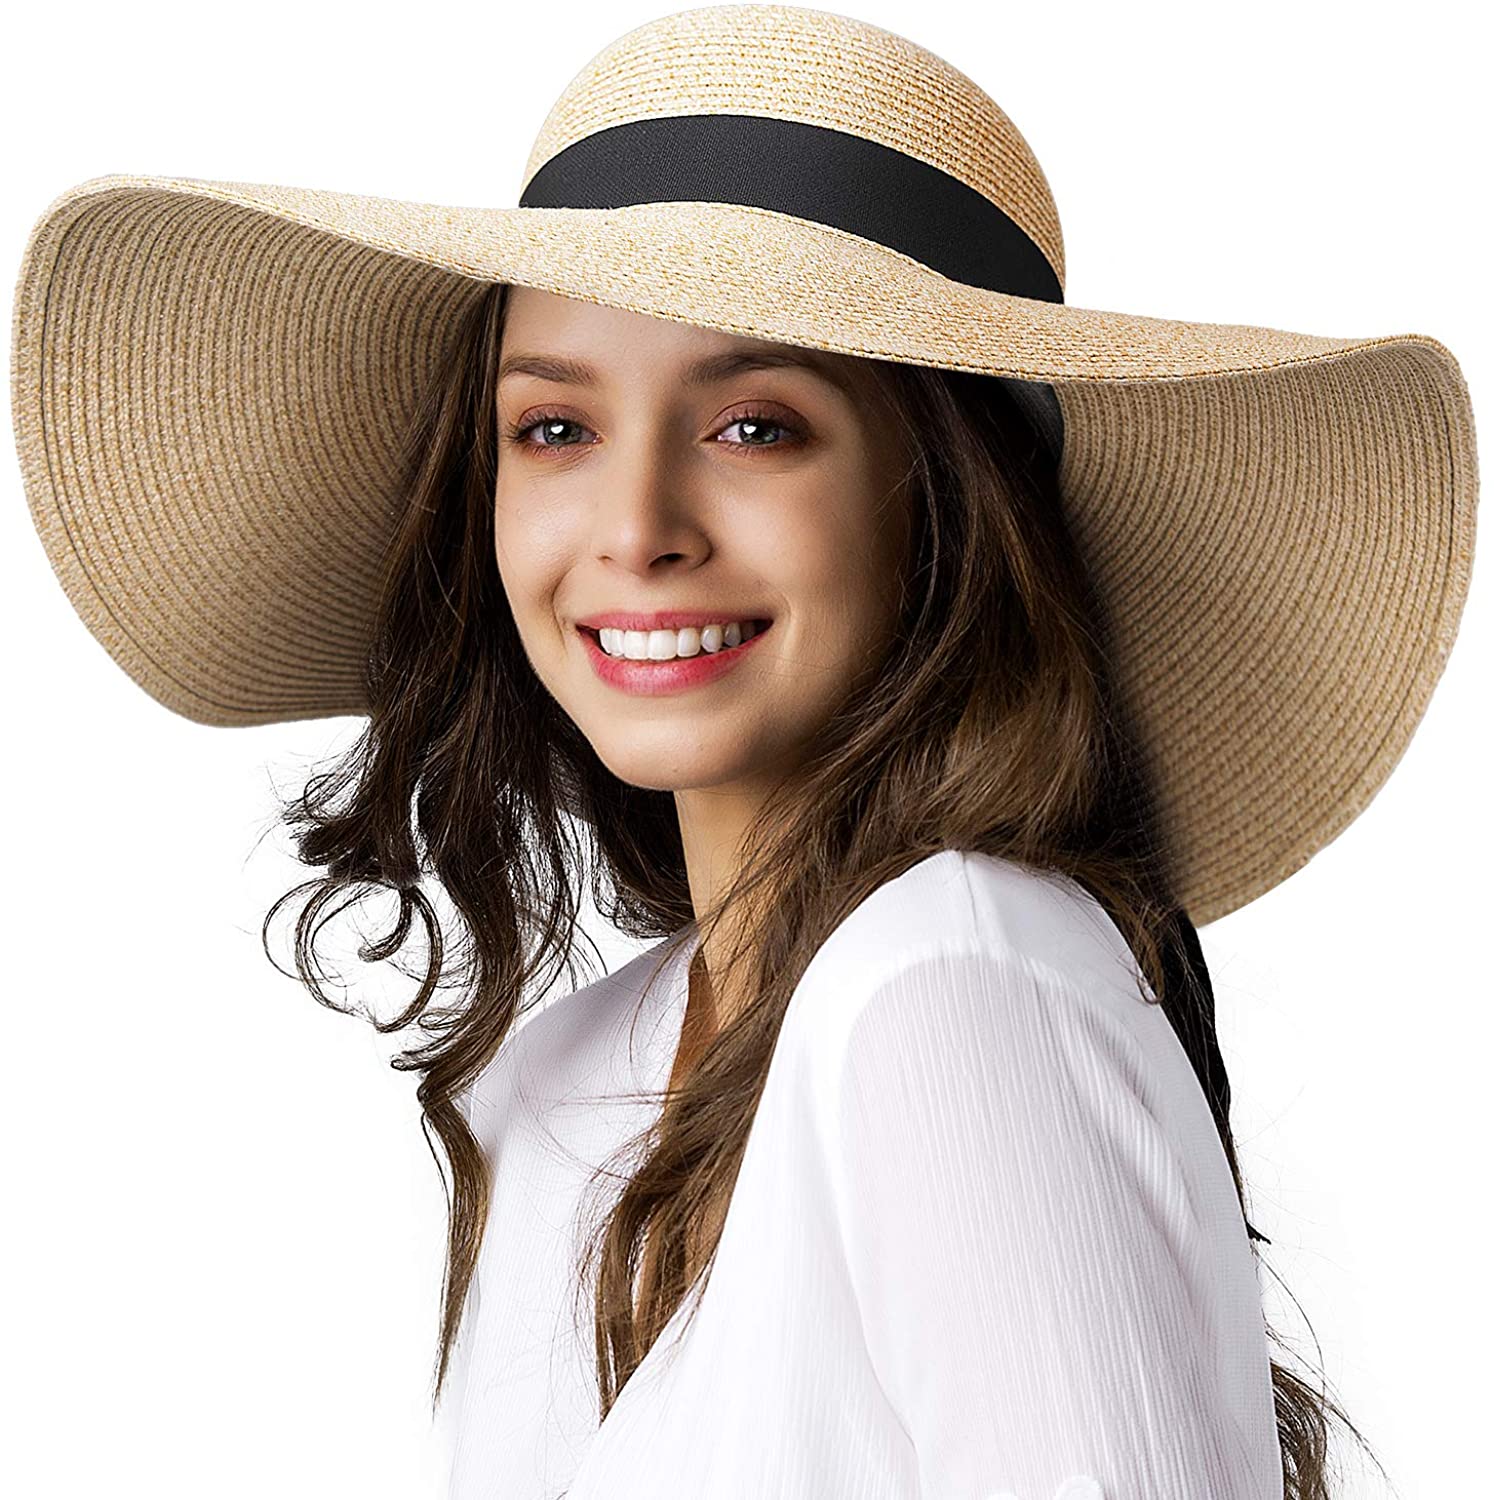 Beach Hats for Women - Sun Hat Womens UPF 50+, Beach Hat Packable Sun Hat Women Roll Up, Wide Brim Straw Hat for Women